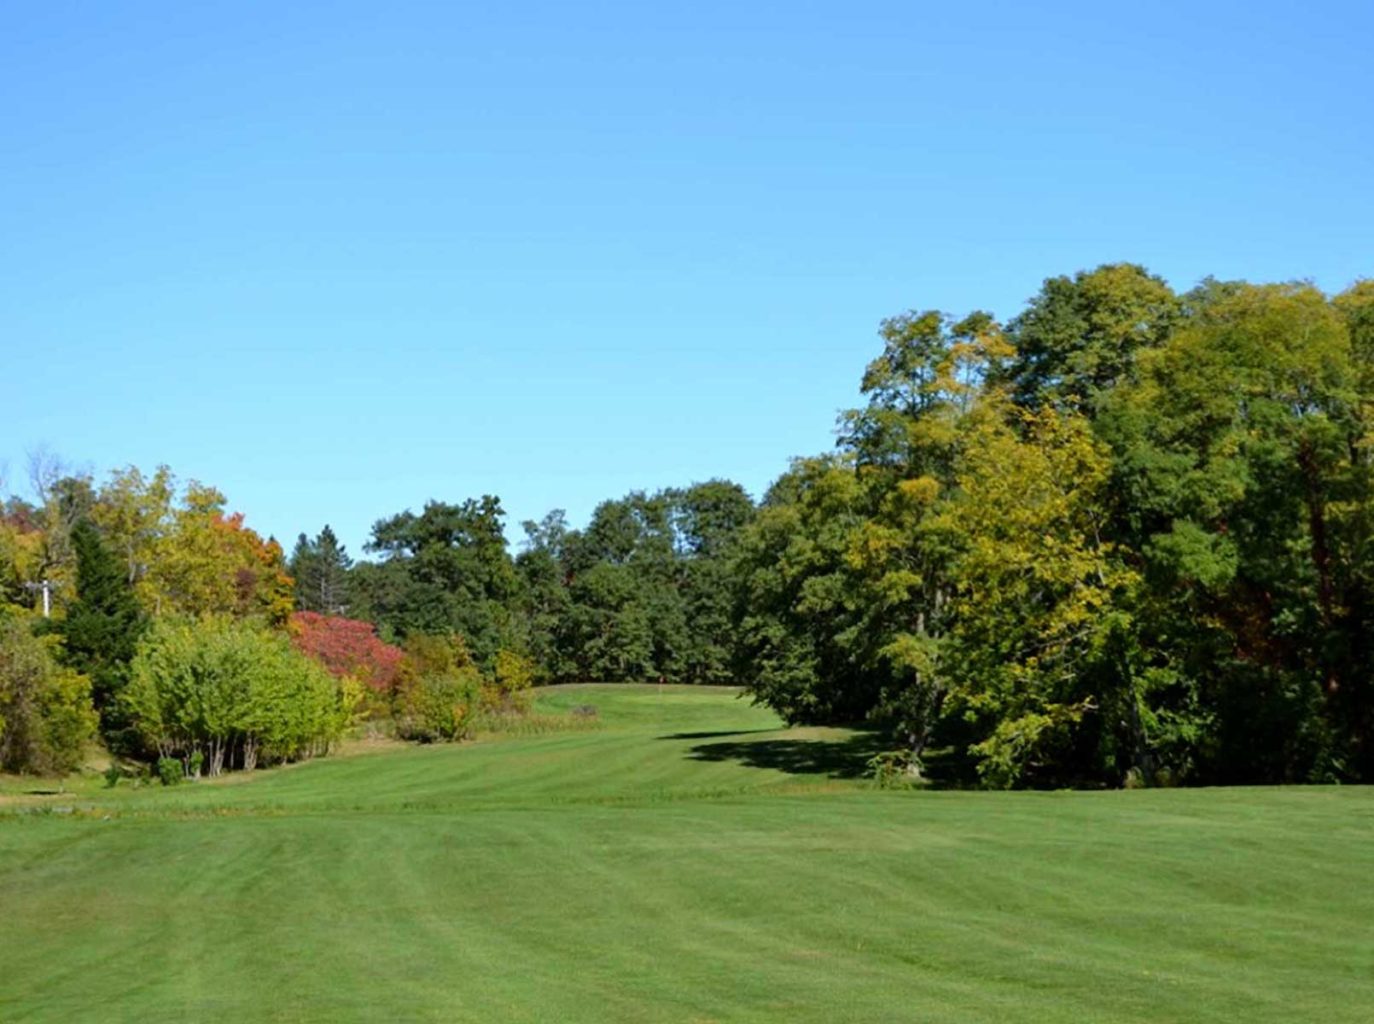 Pheasant Hollow Golf Course